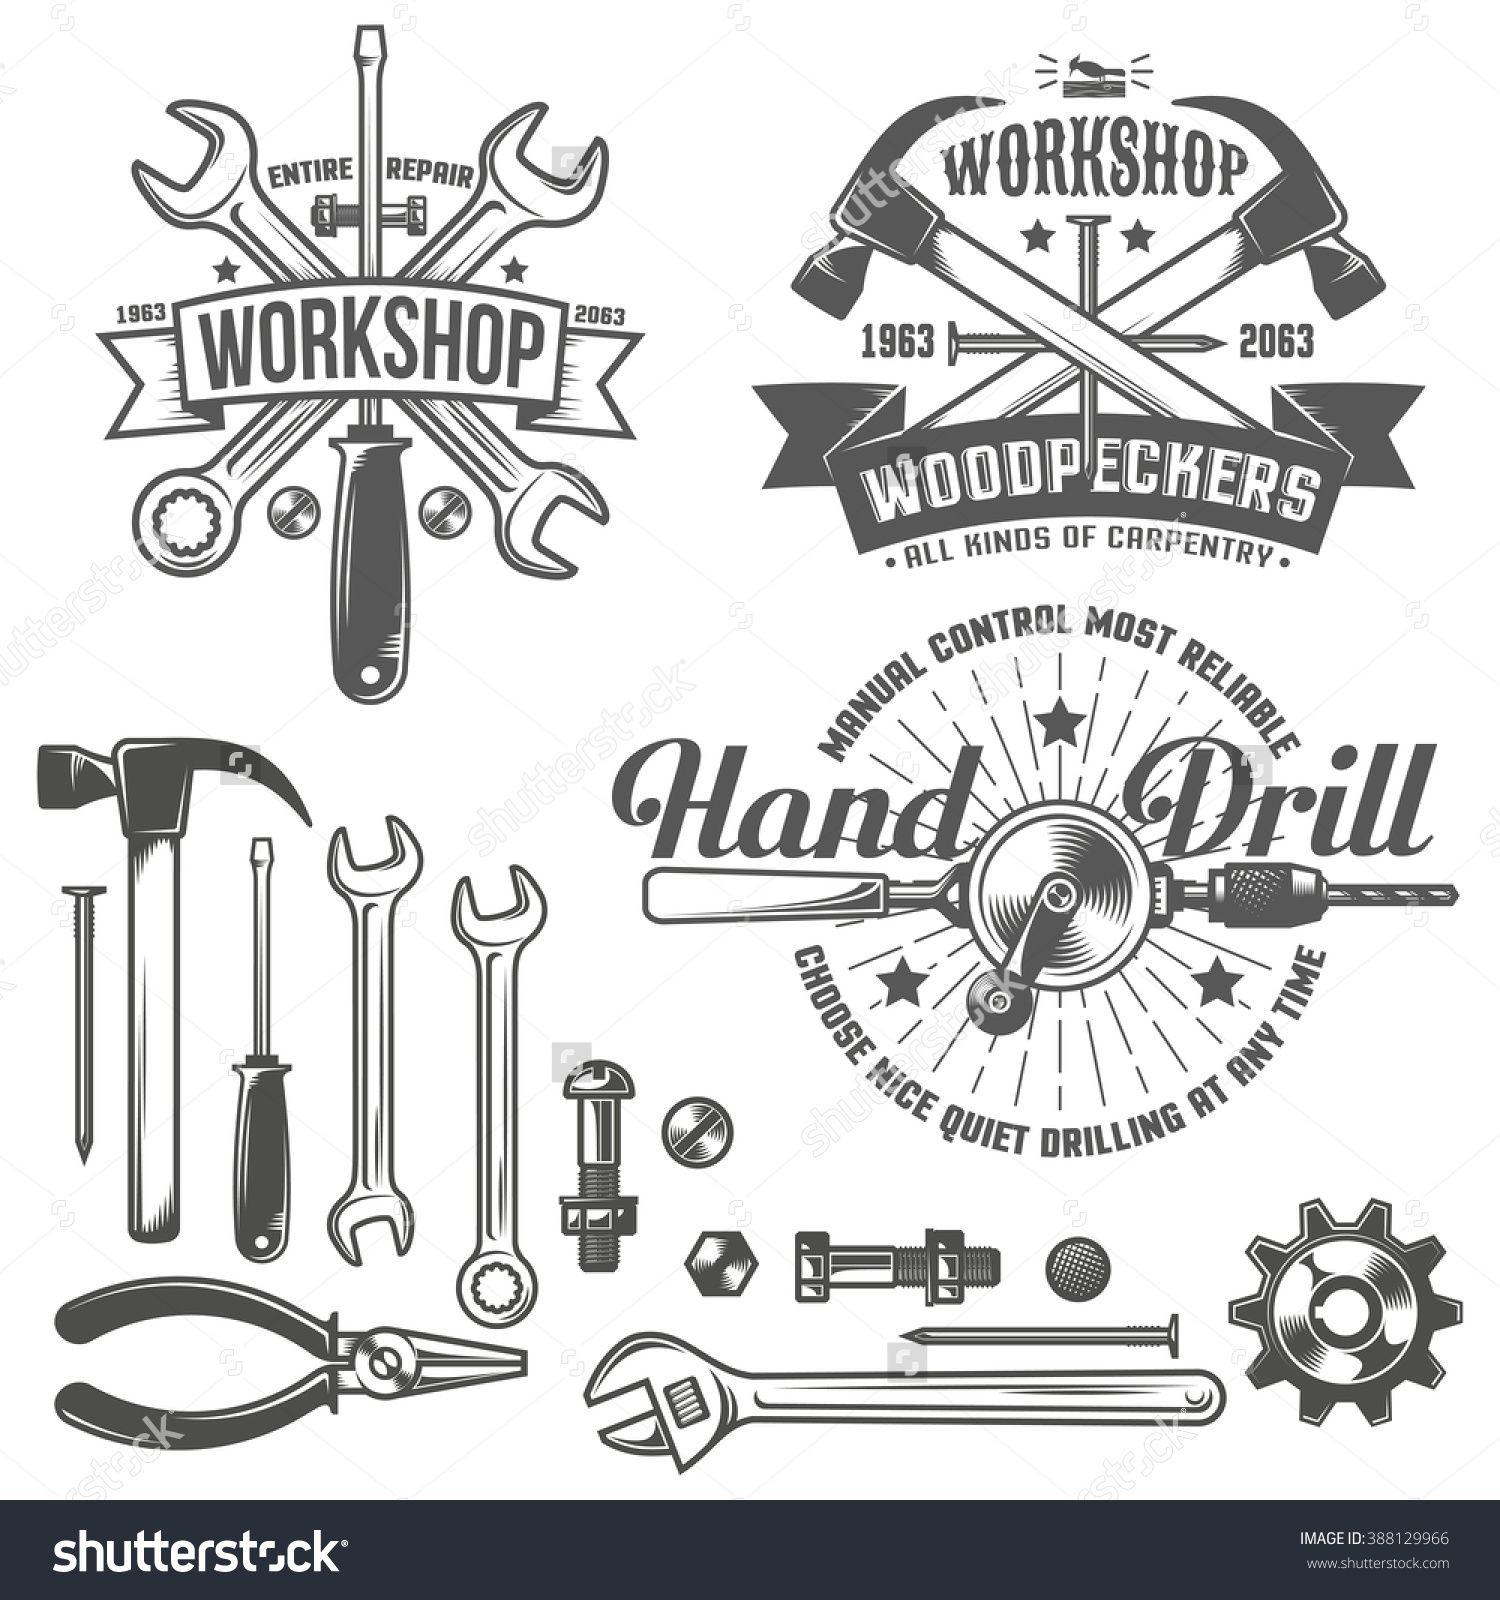 Tools Logo - Vintage, retro emblem repair workshop and tool shop. Working tools